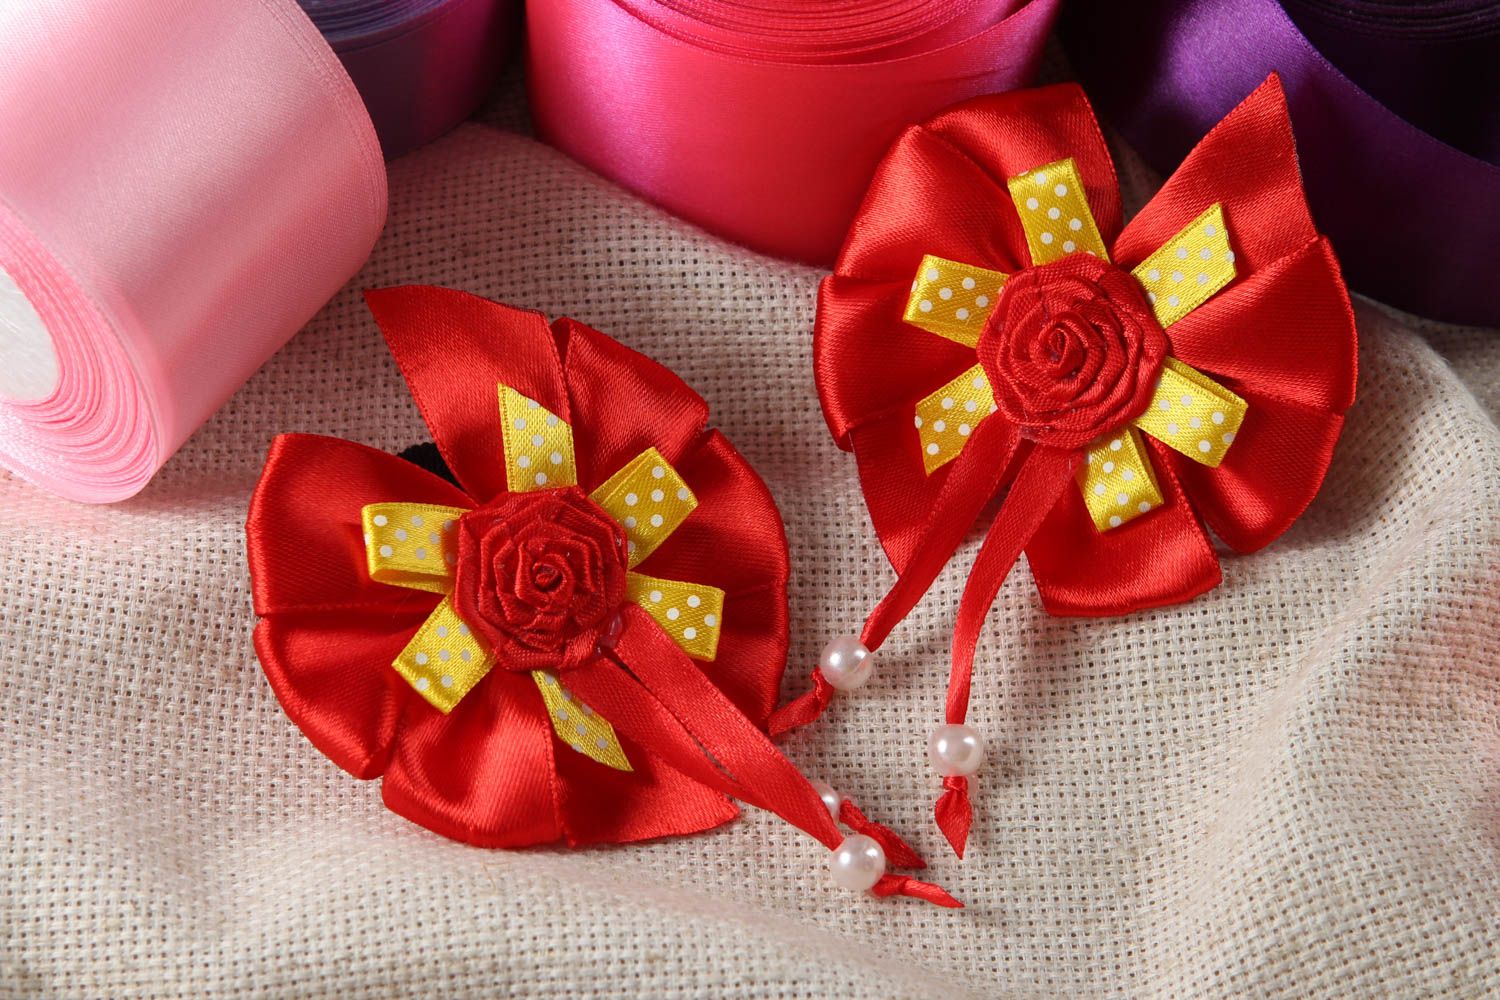 Handmade hair ties flower hair accessories kids accessories gifts for girls photo 1